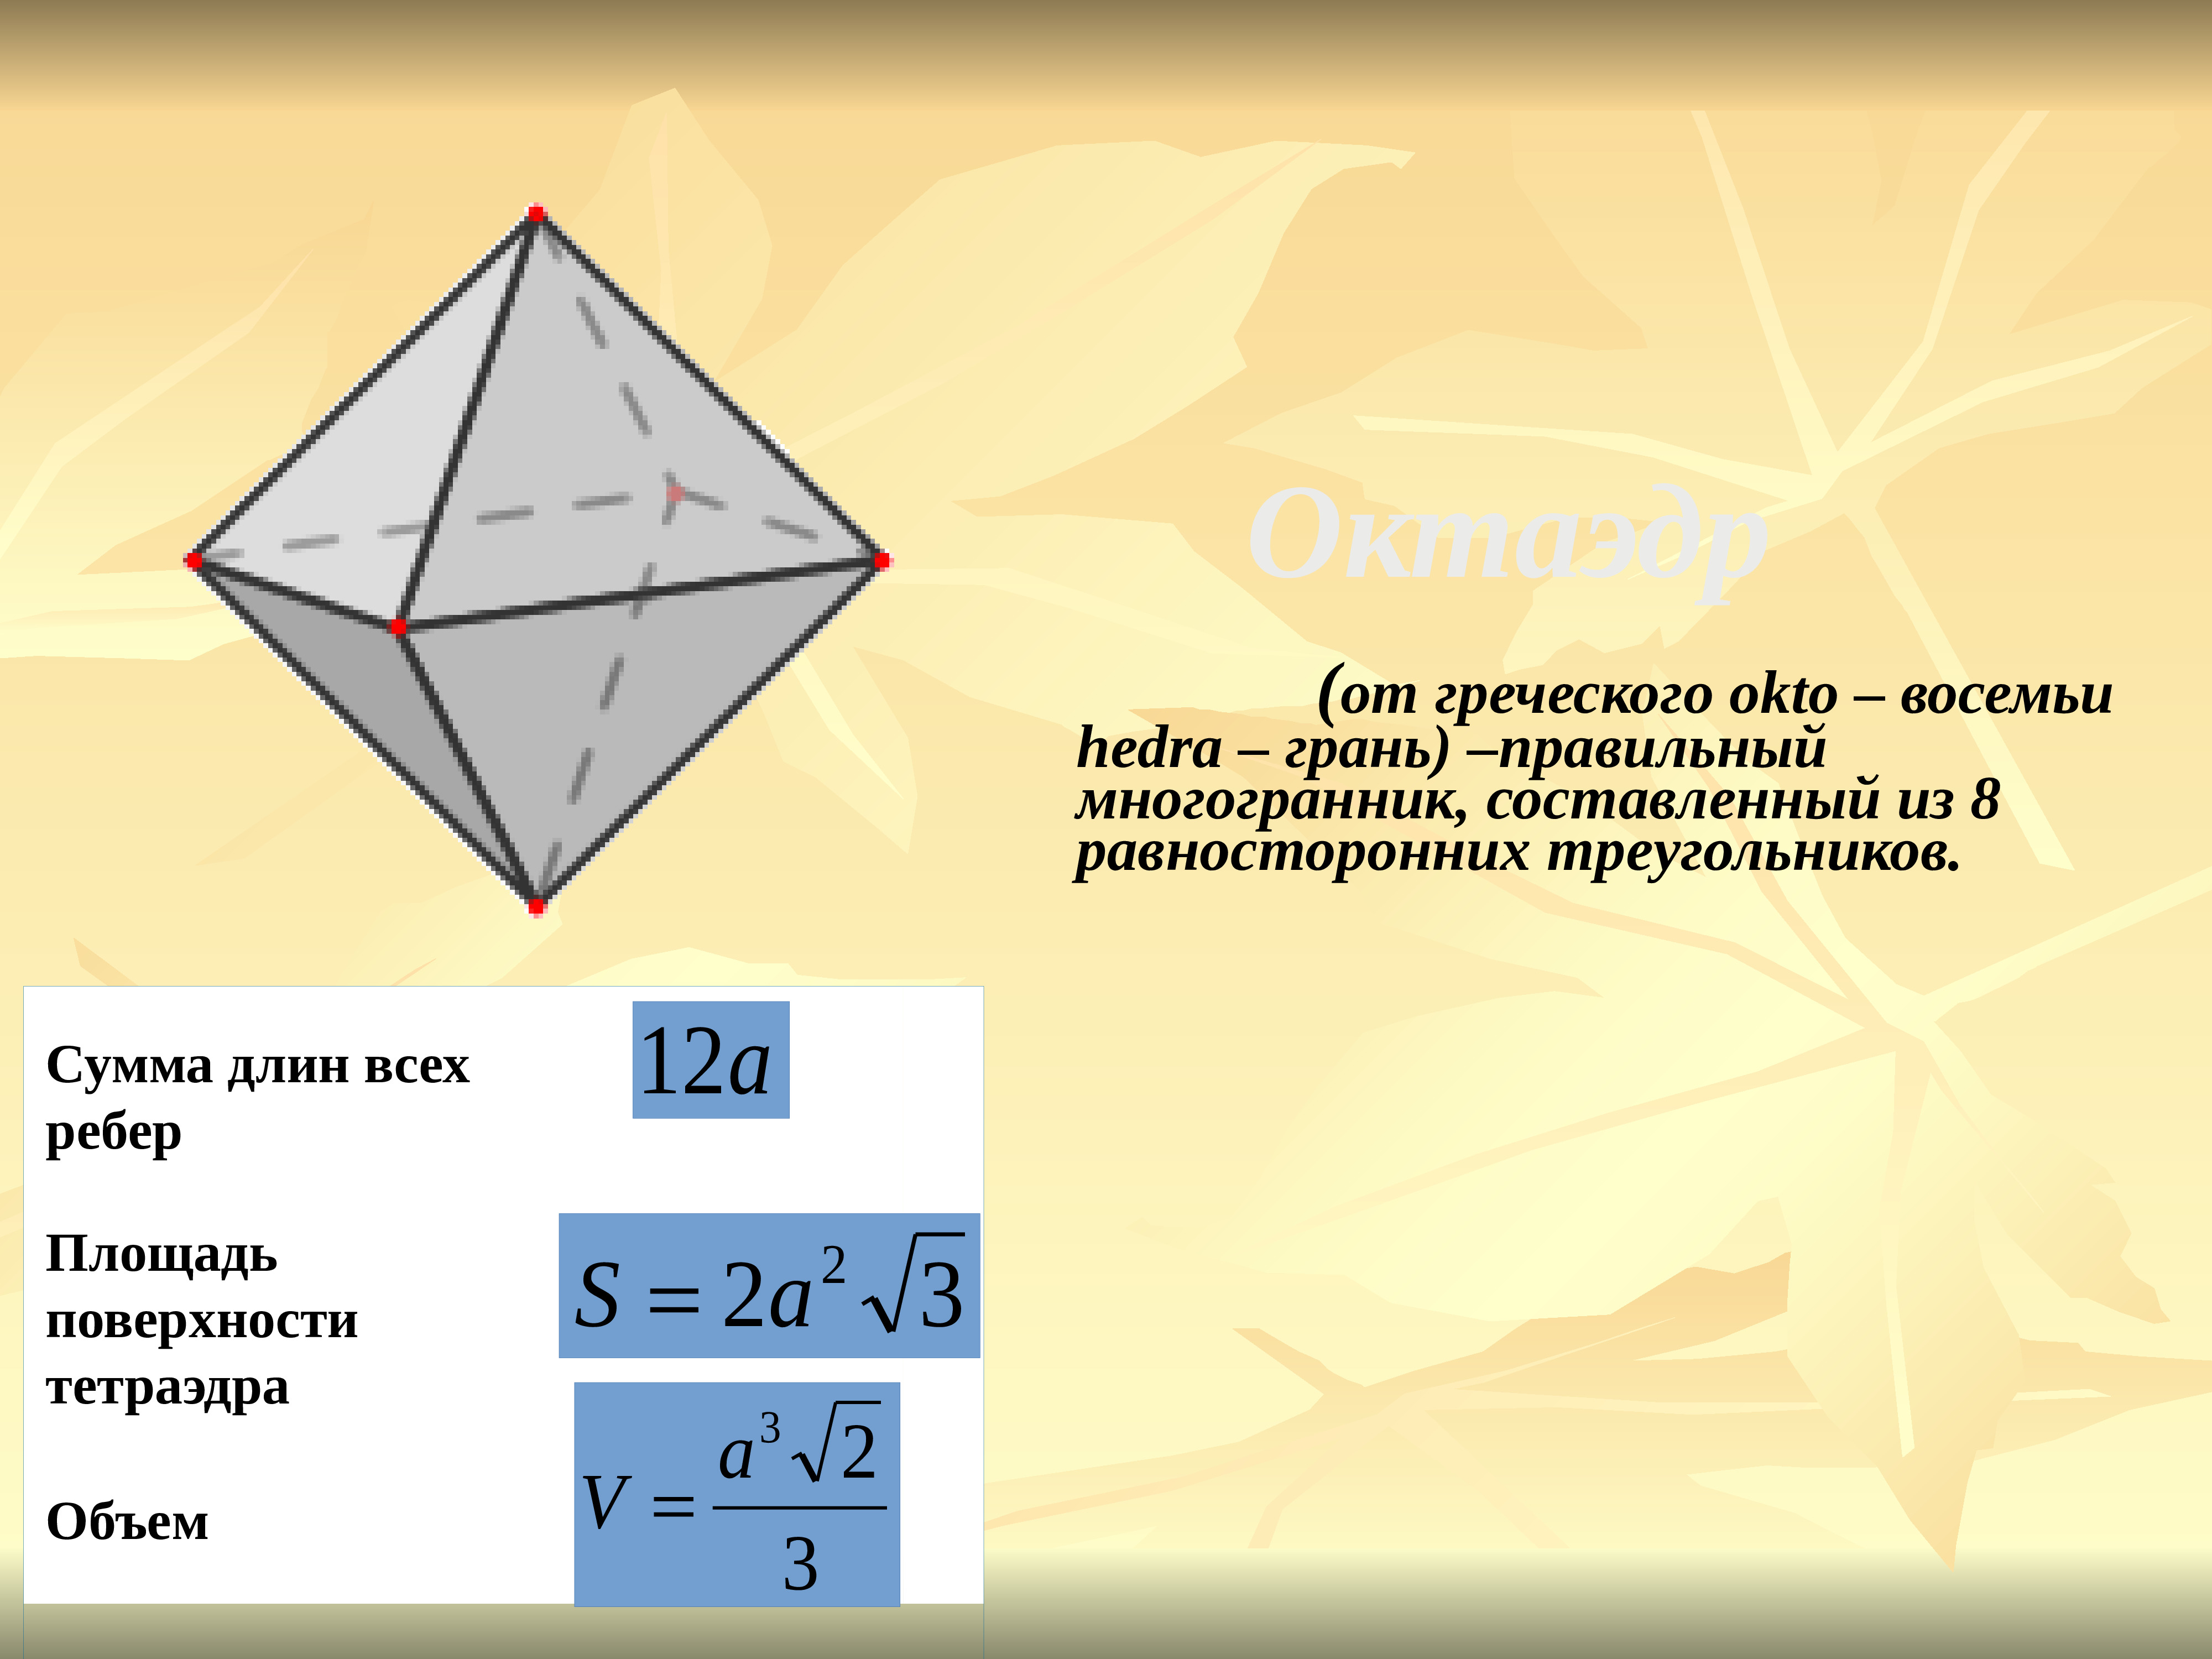 Диагонали октаэдра